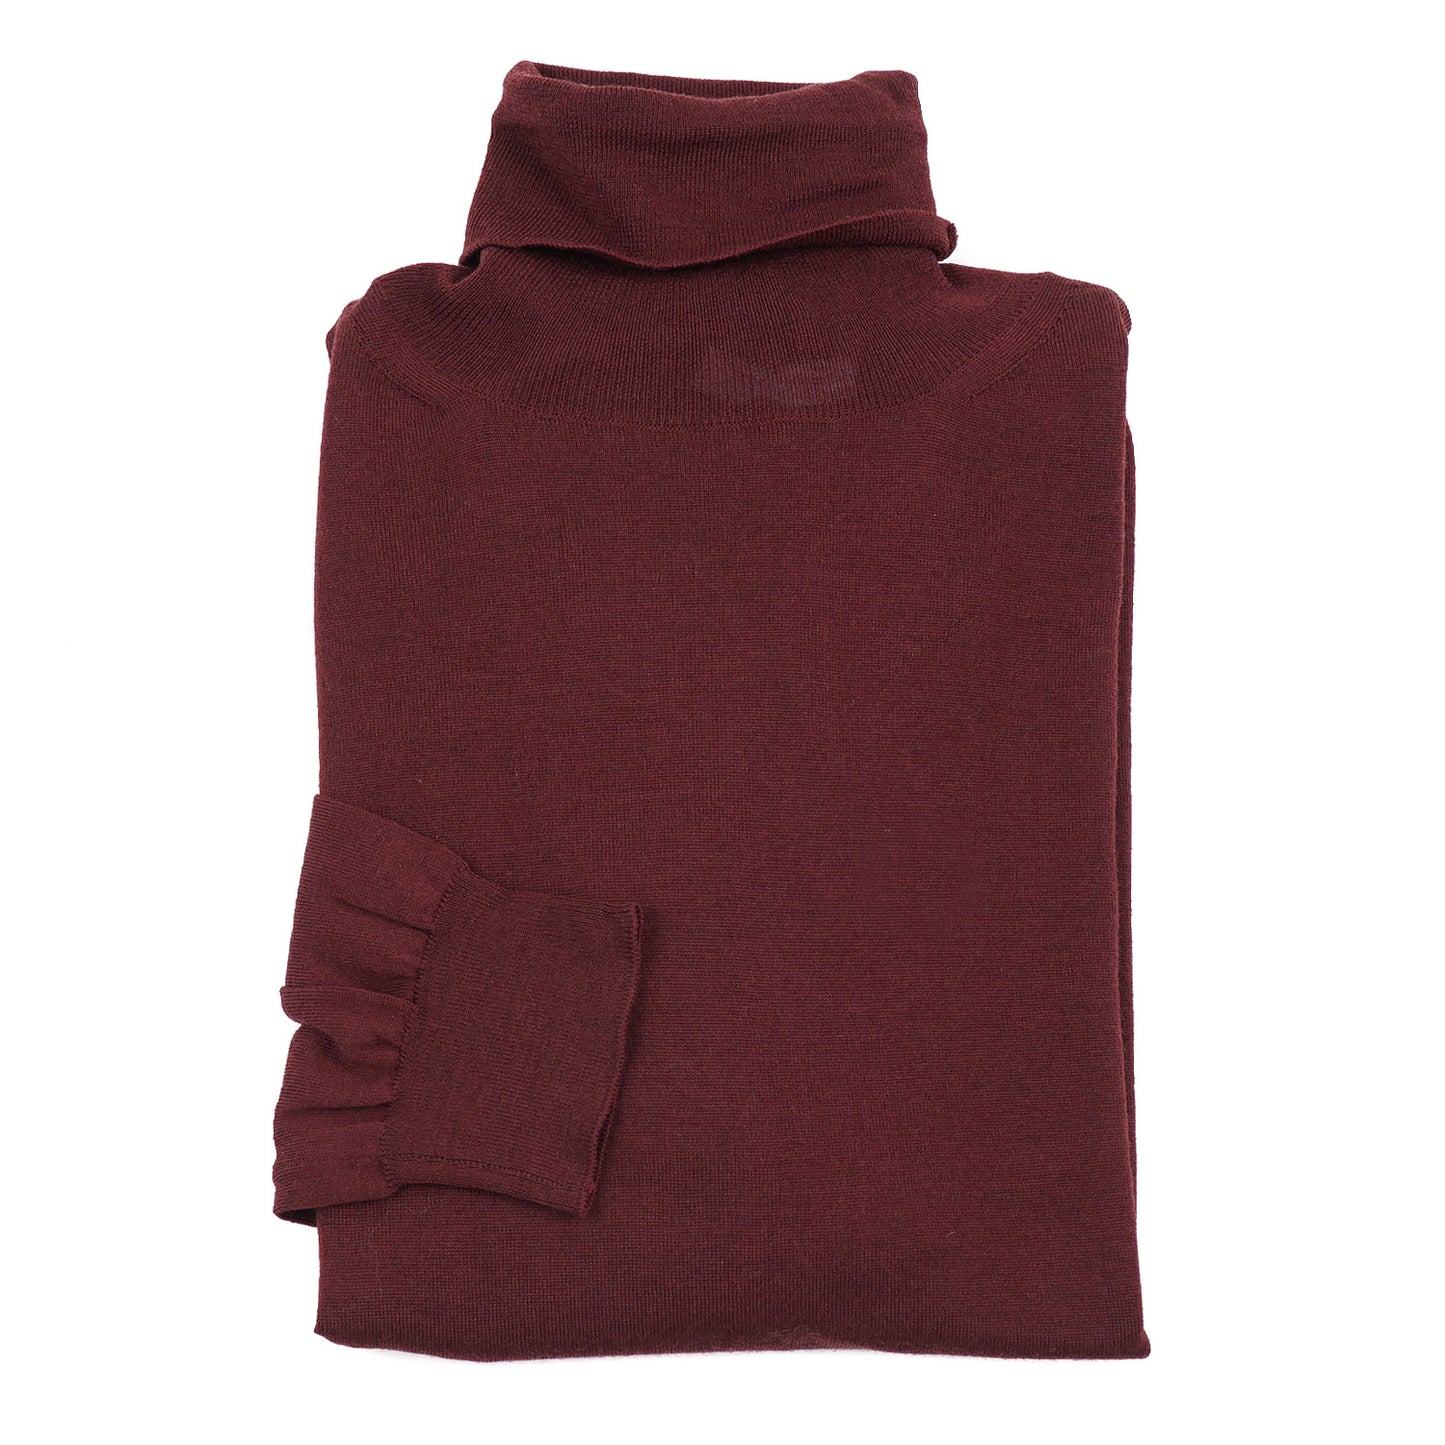 Boglioli Superfine Merino Wool Sweater - Top Shelf Apparel